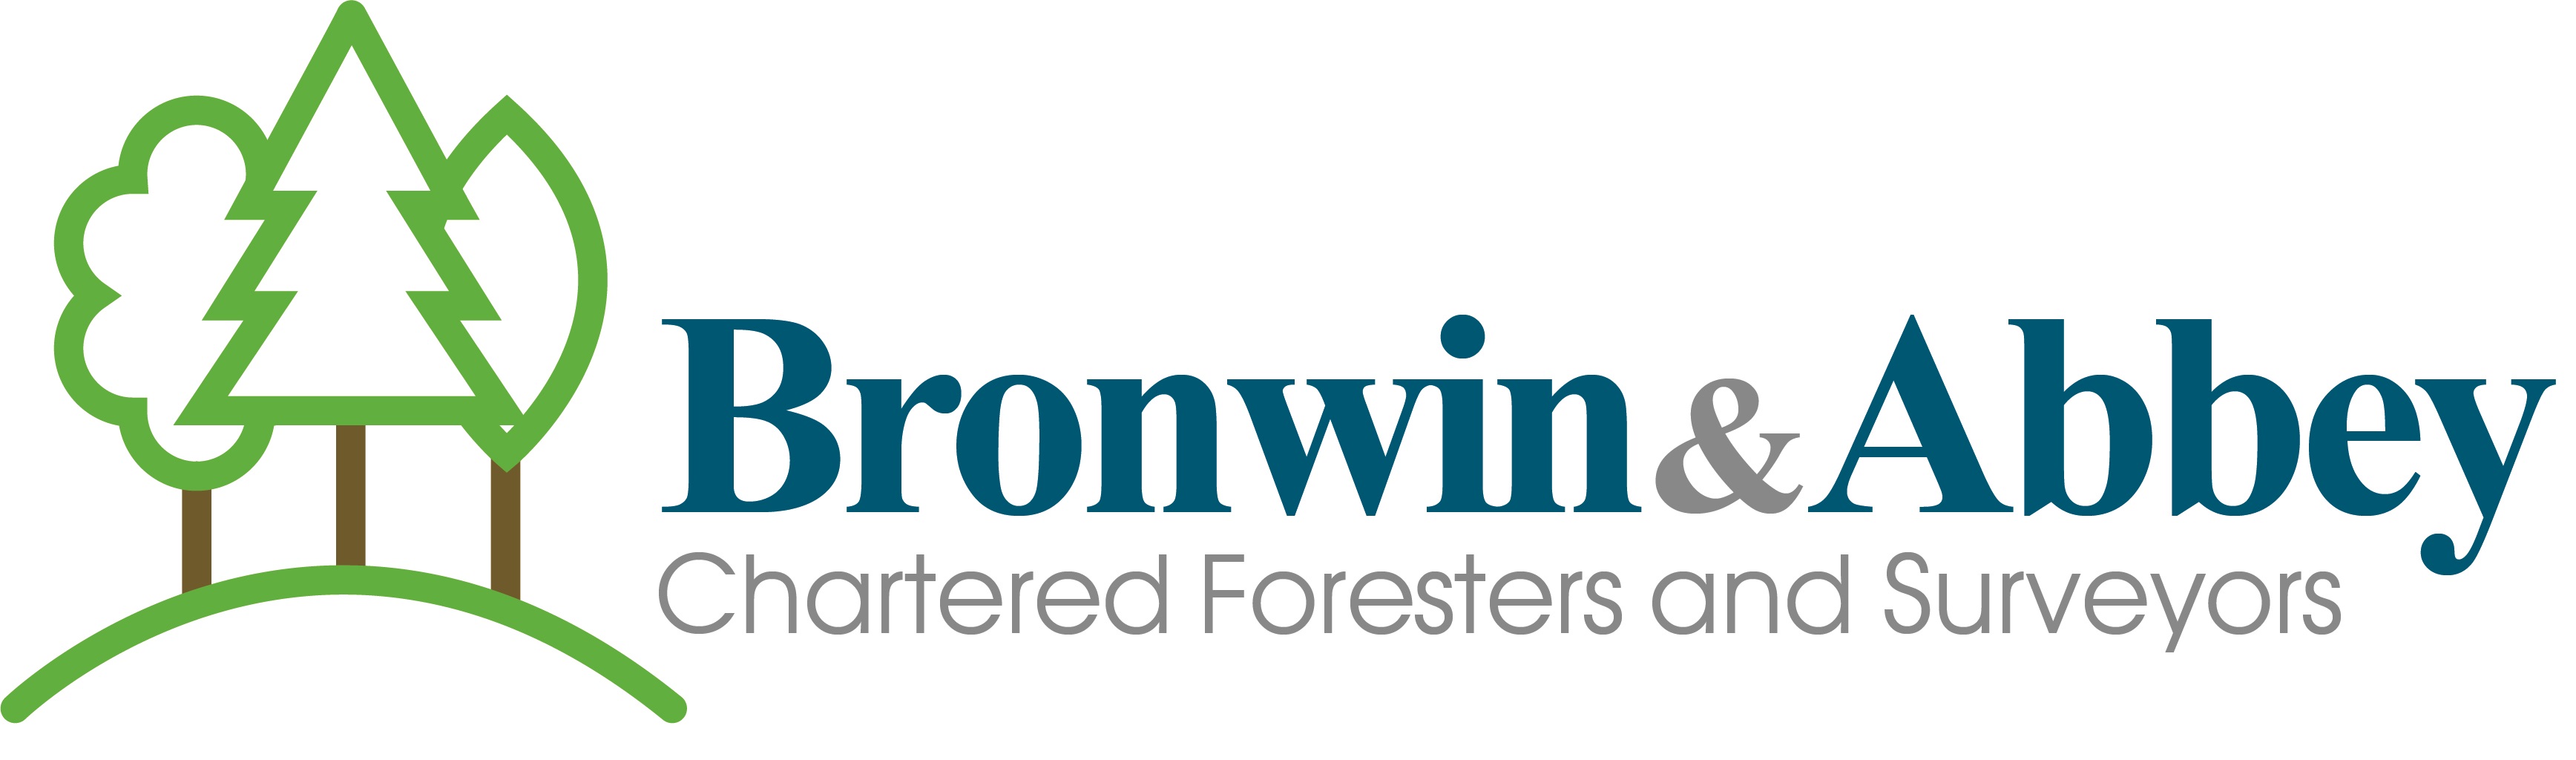 Bronwin and Abbey Logo